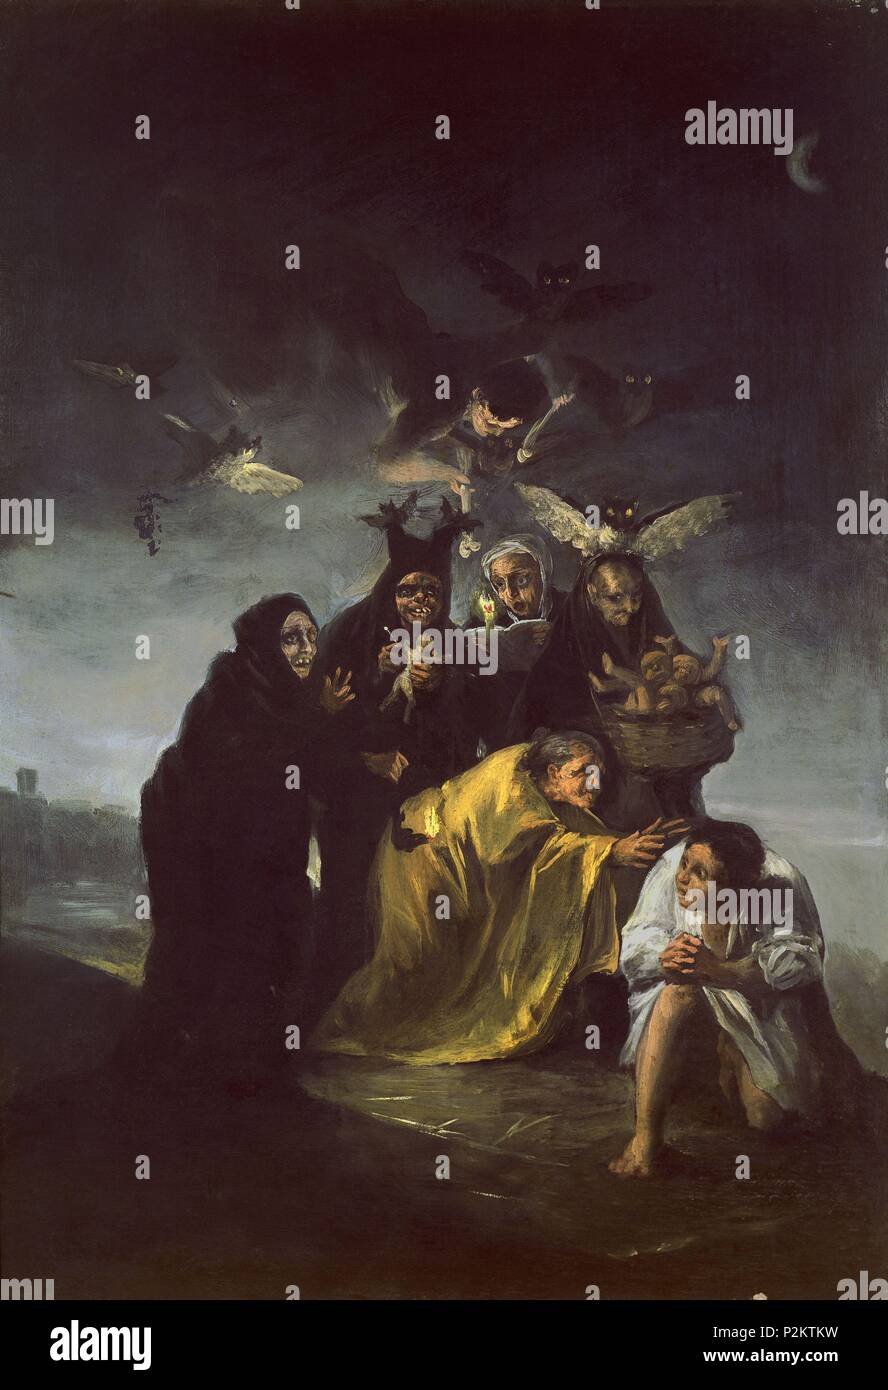 Spanish school. Witches' scene or Scene of an exorcism. Escena de brujas o Escena de exorcismo. 1797/98. 45x 32 cm.. Madrid, Lazaro Galdiano museum. Author: Francisco de Goya (1746-1828). Location: MUSEO LAZARO GALDIANO-COLECCION, MADRID, SPAIN. Stock Photo